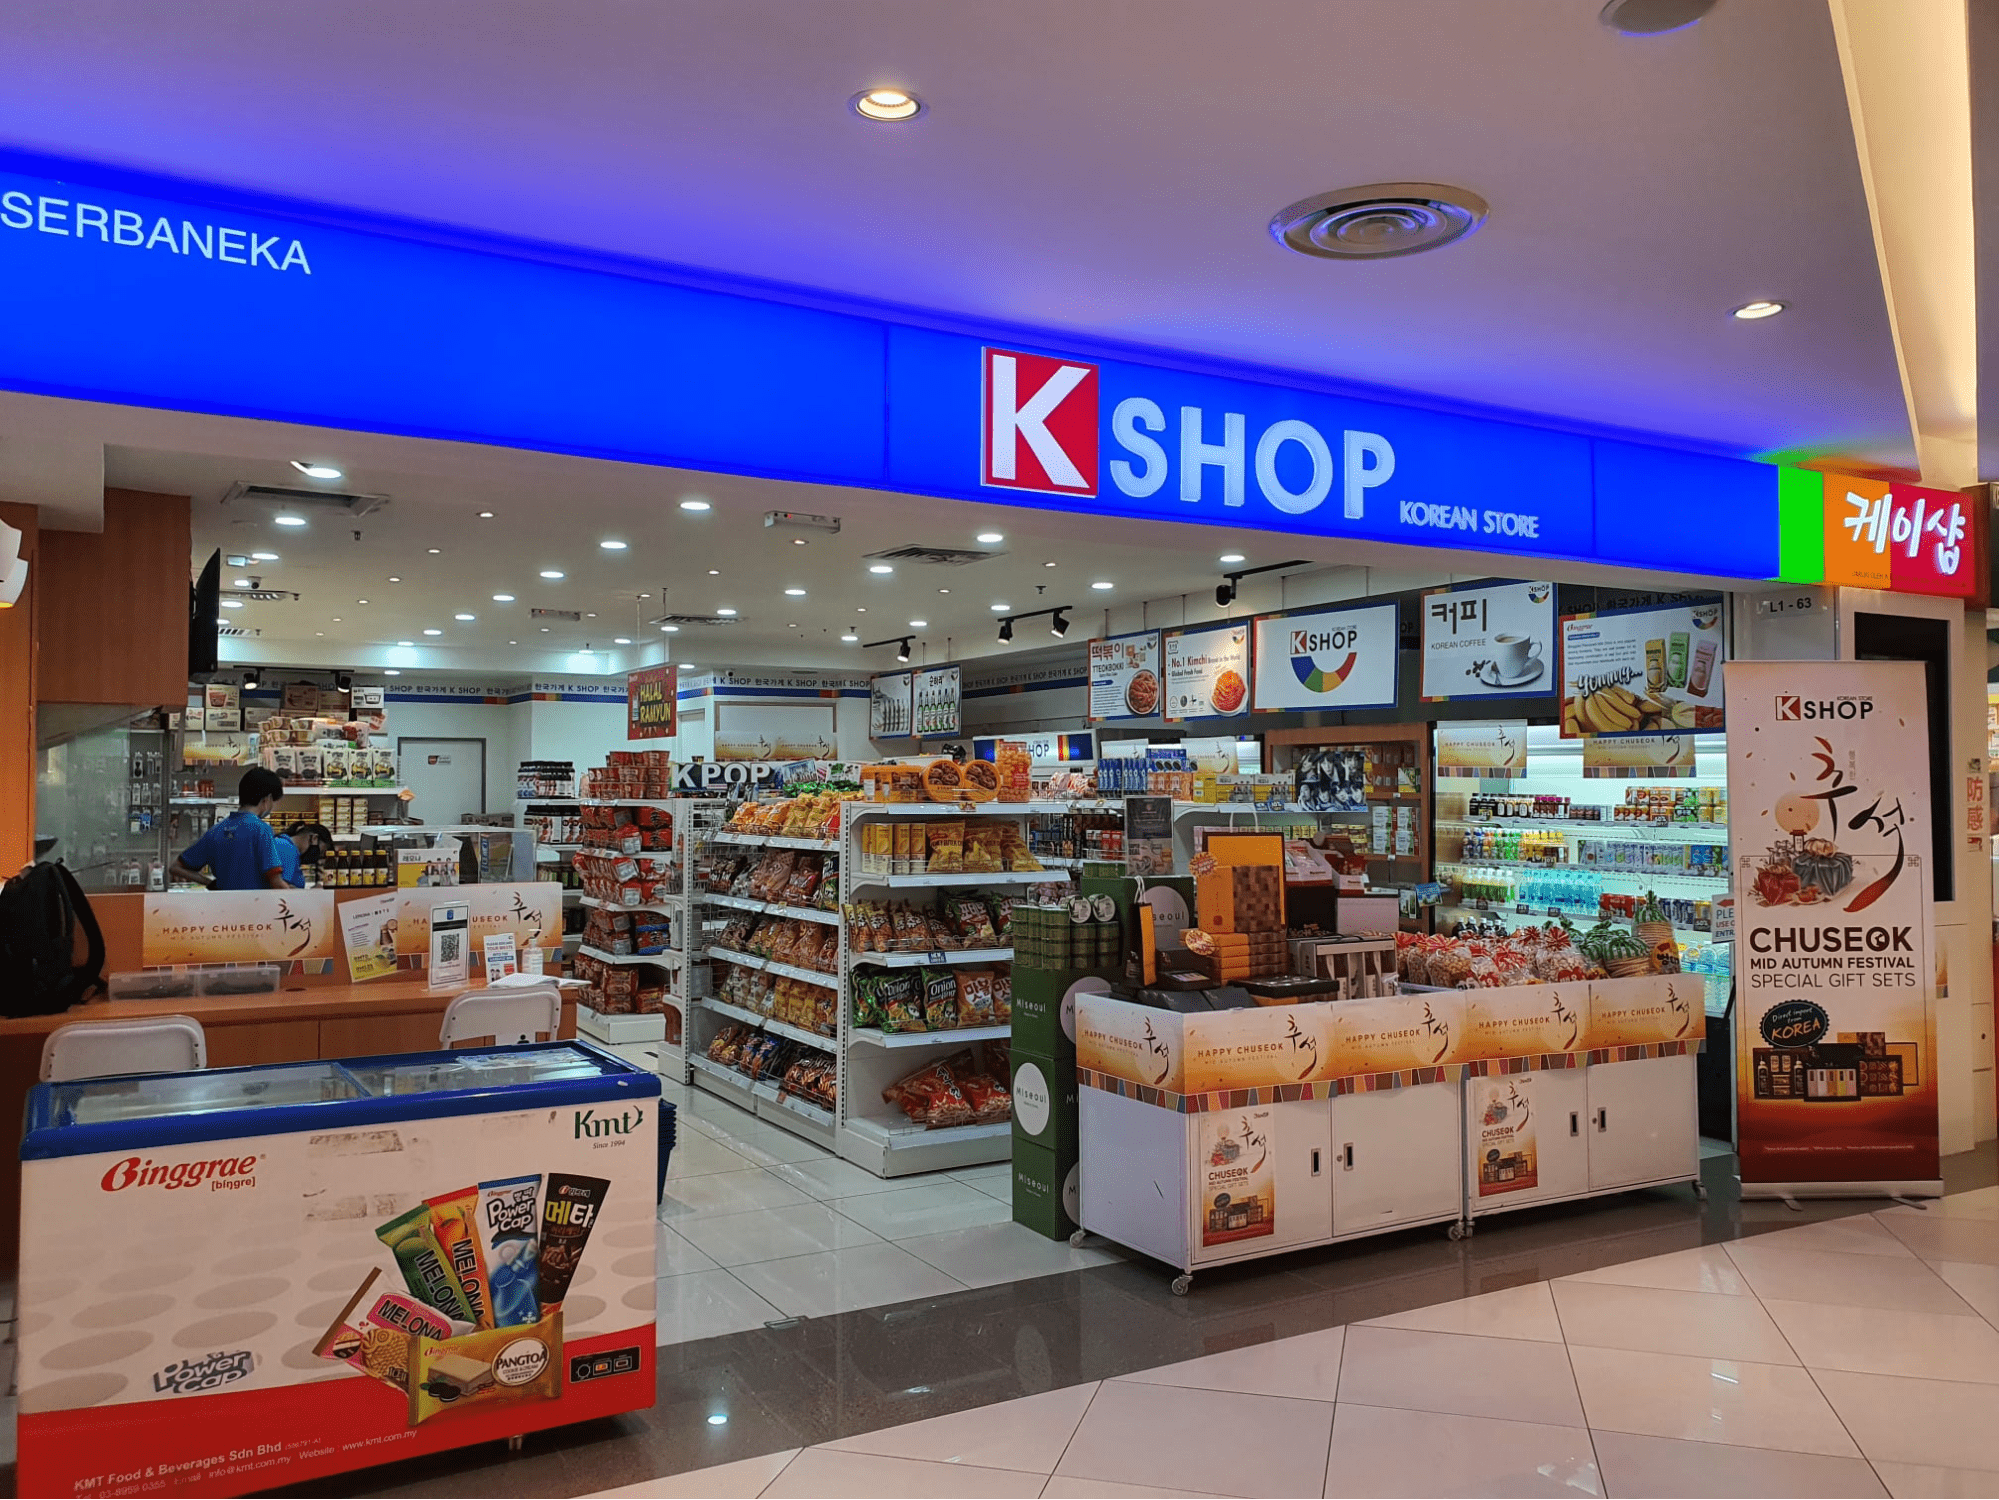 Korean grocery stores - K Shop